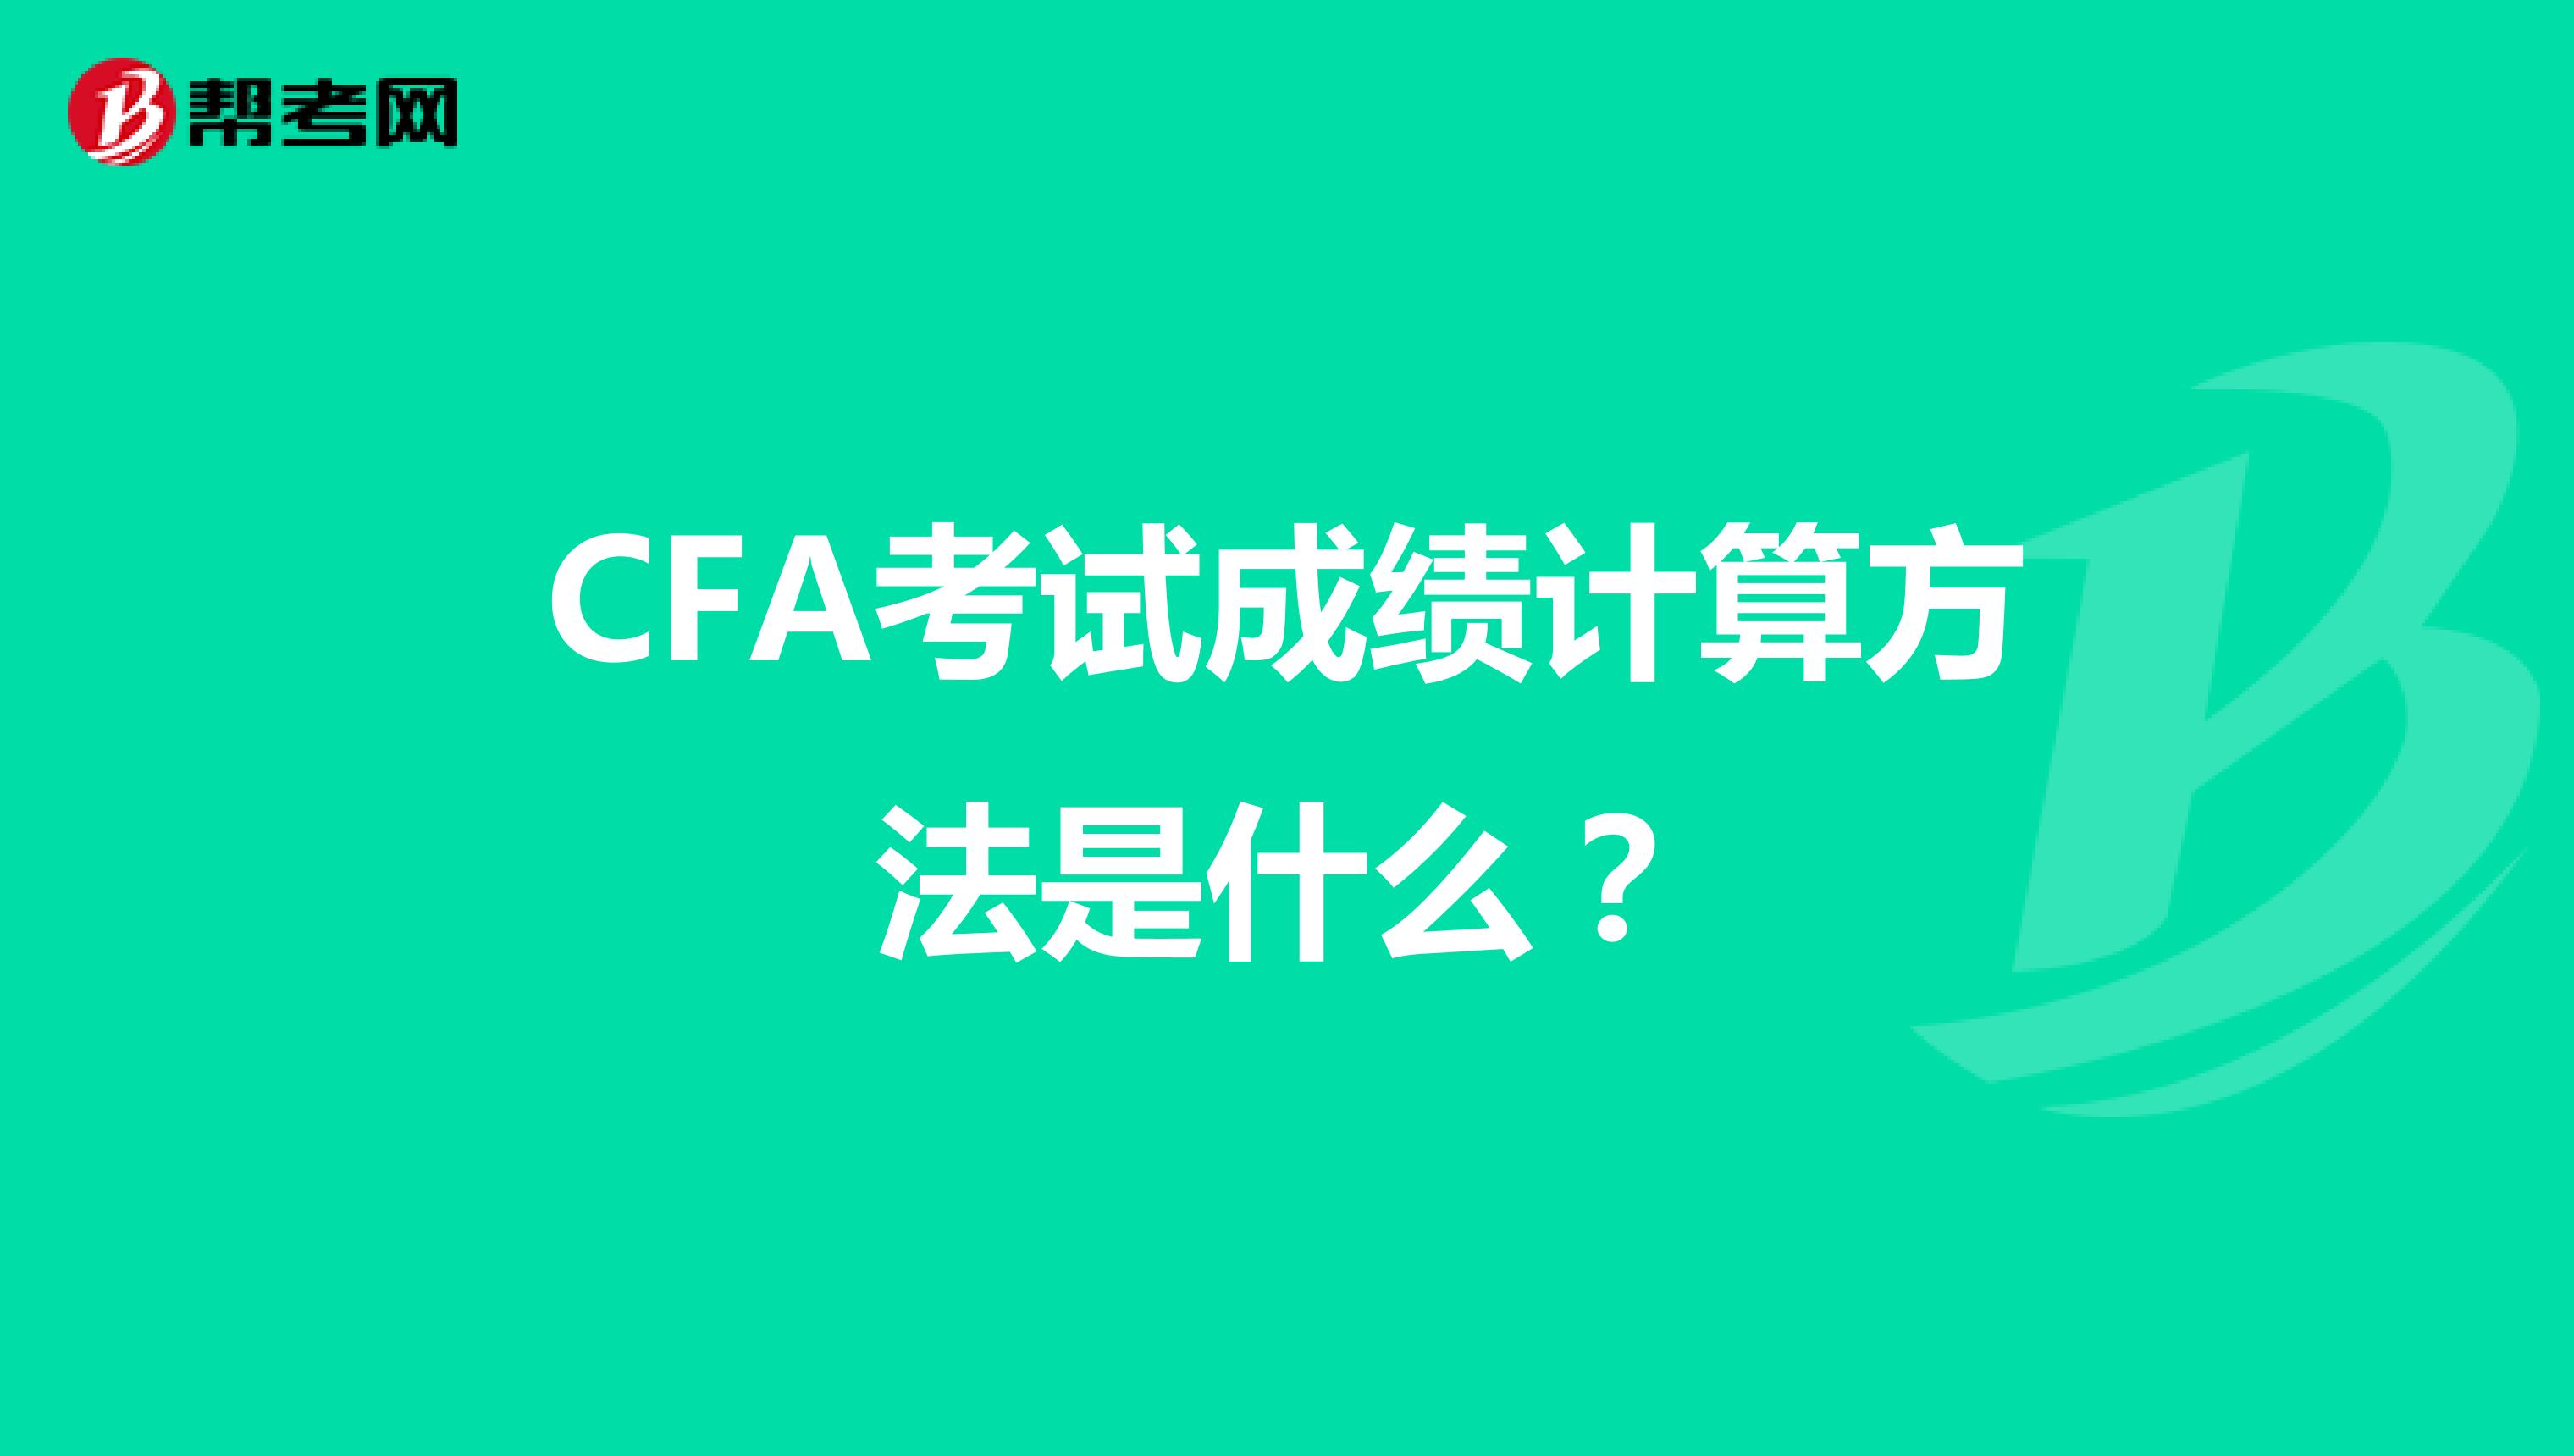 CFA考试成绩计算方法是什么？